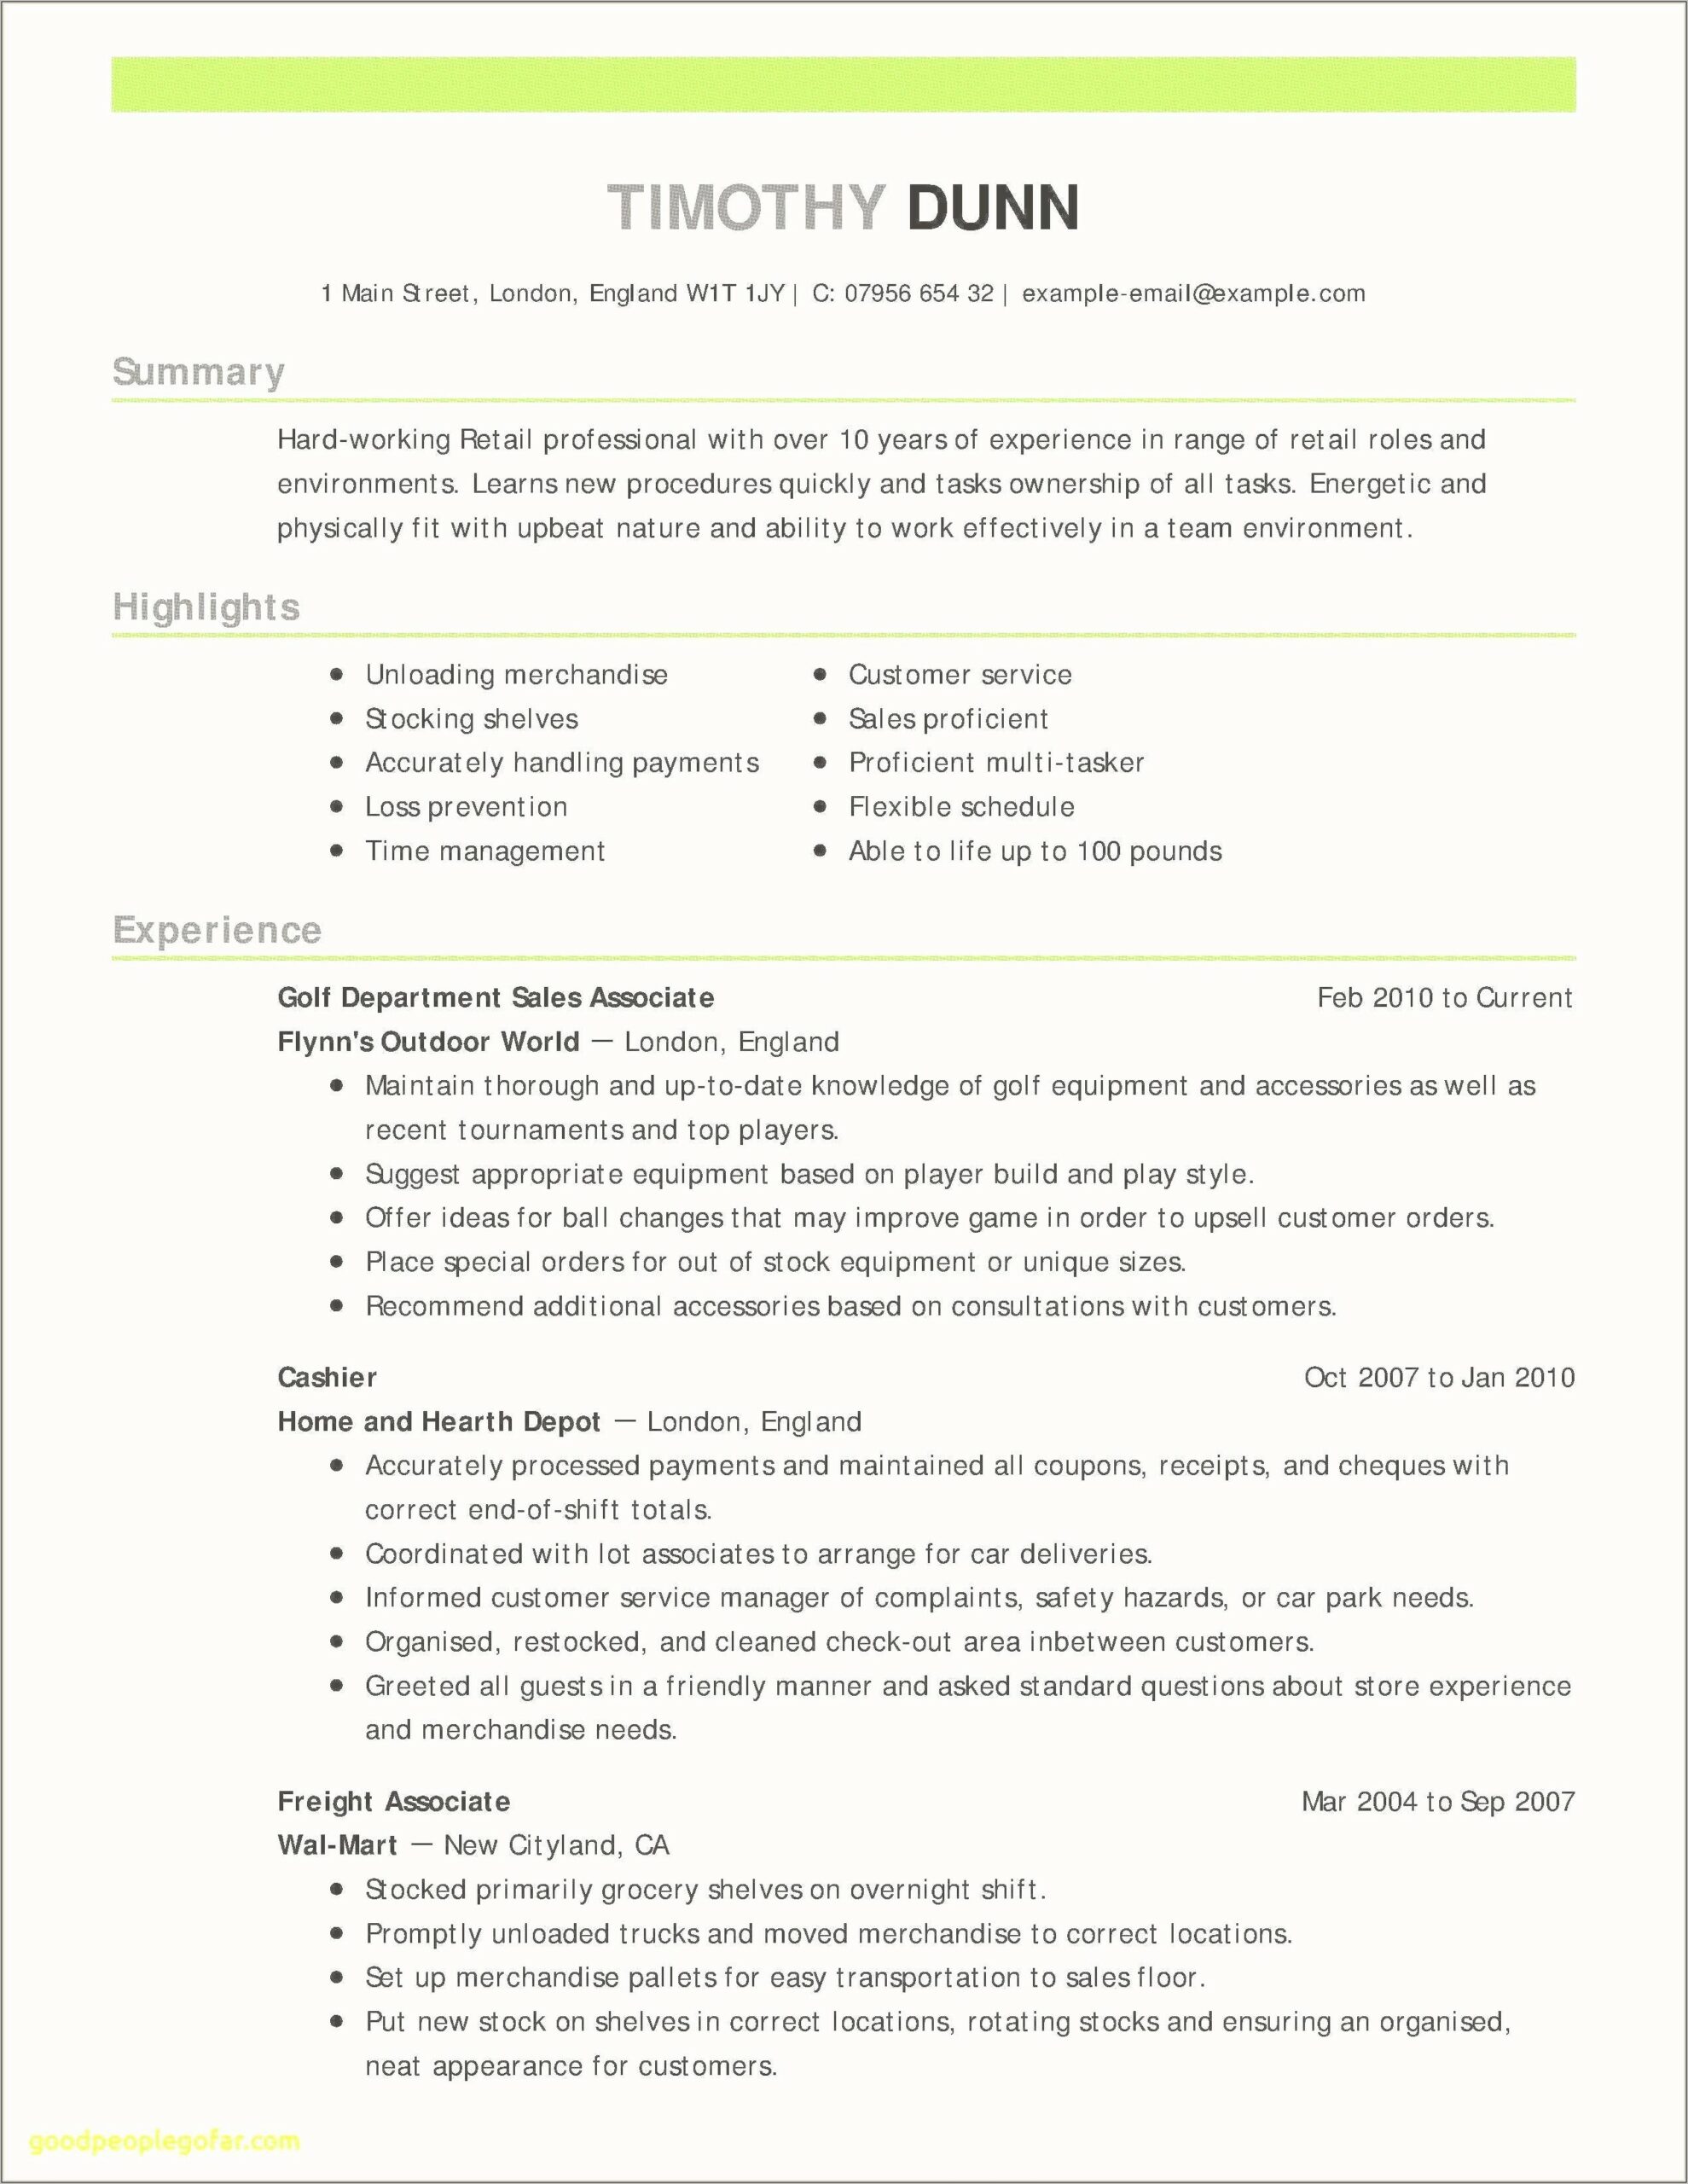 Freight Associate Job Description Resume